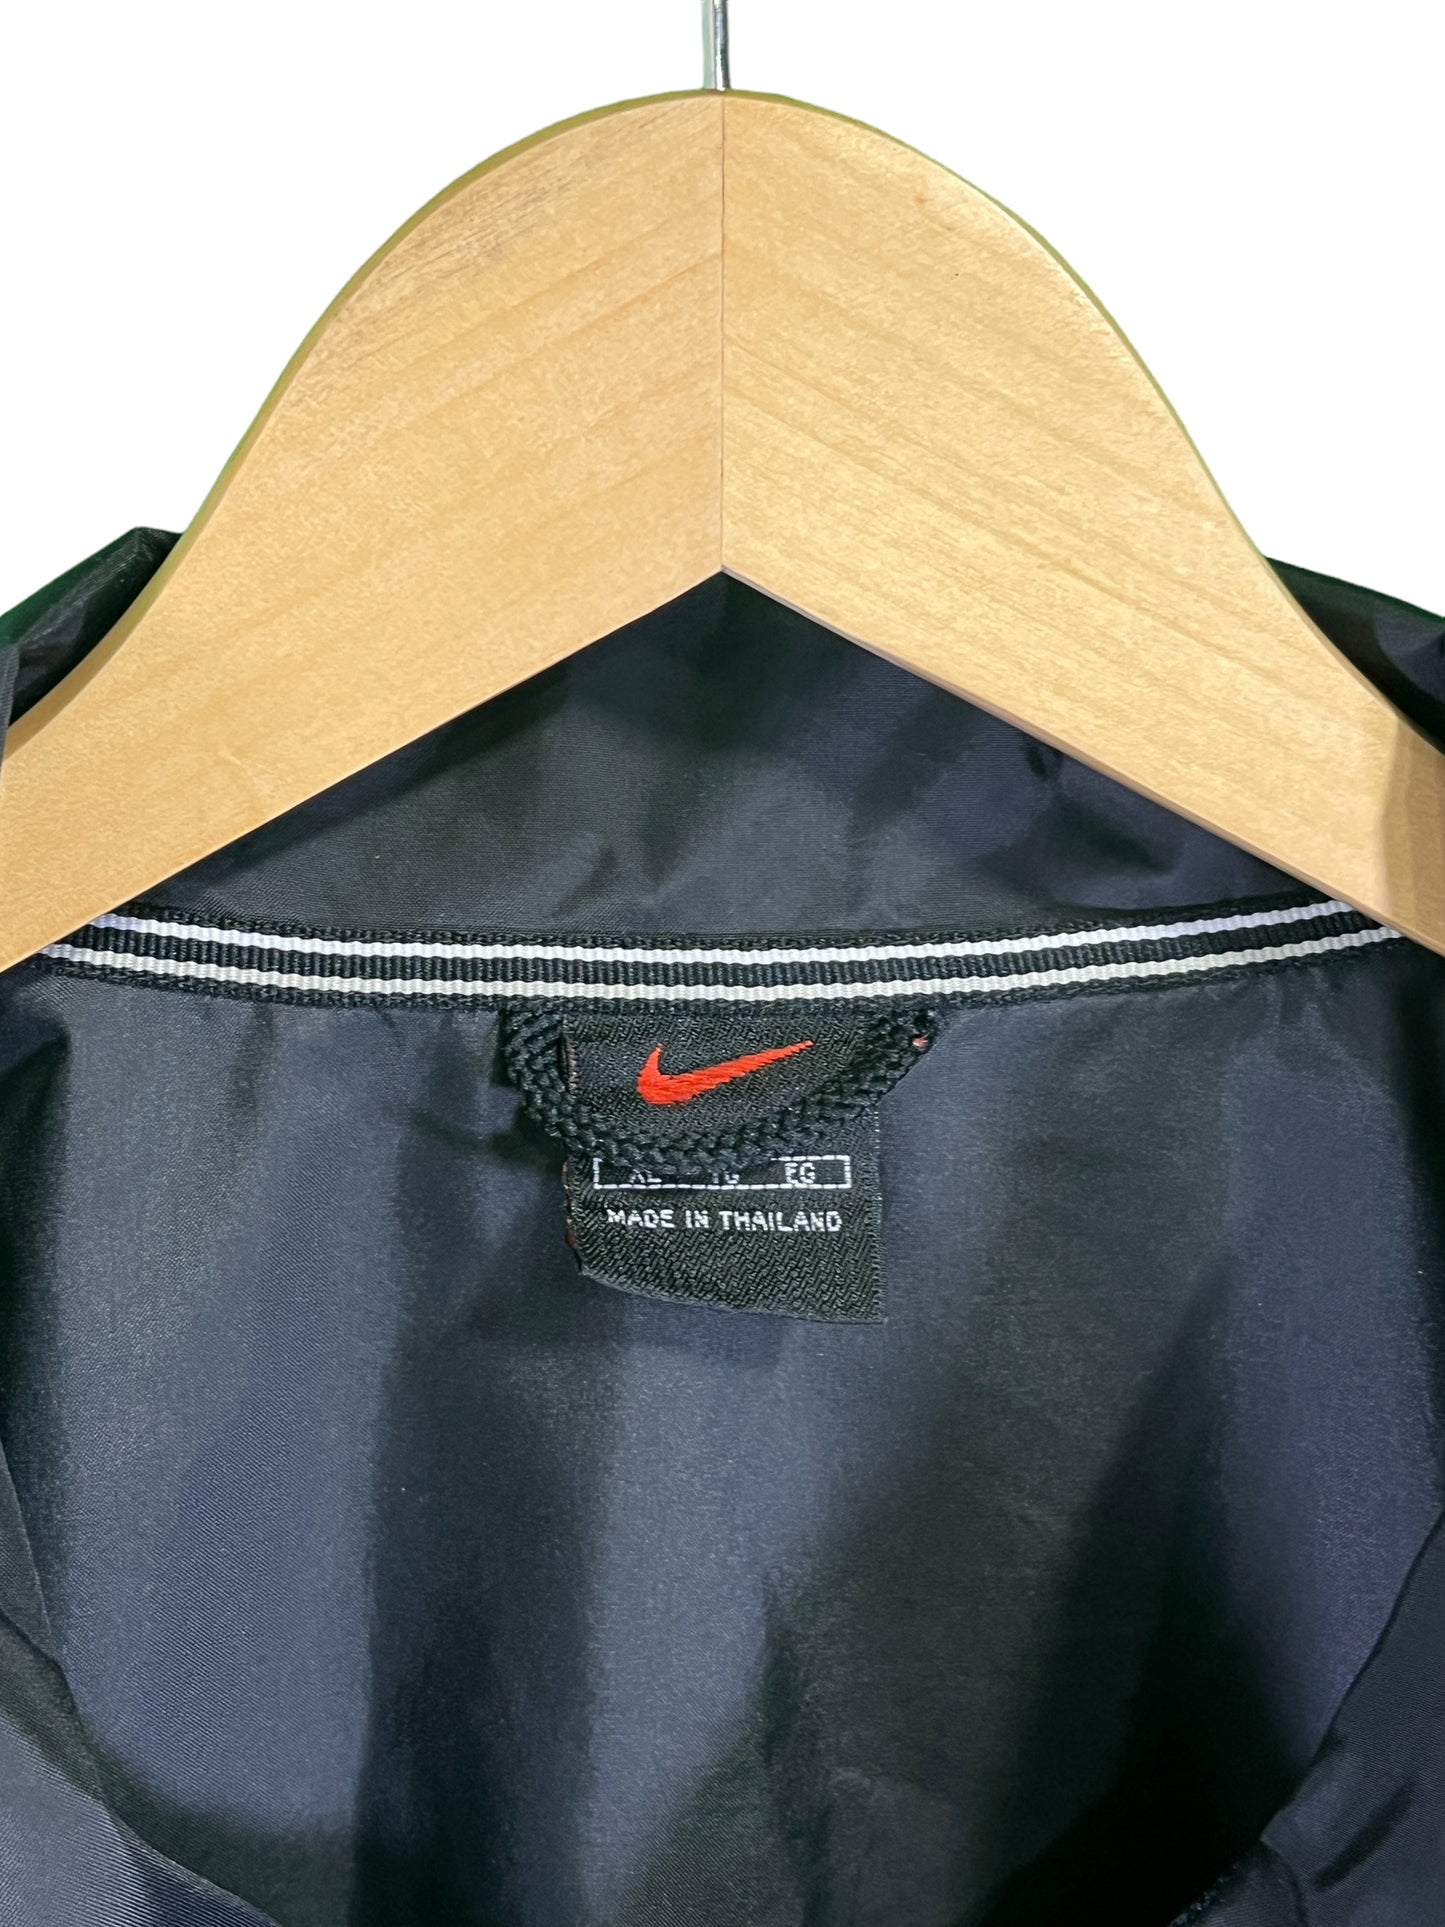 Vintage 90's Nike Black Red Zip Up Windbreaker Size XL